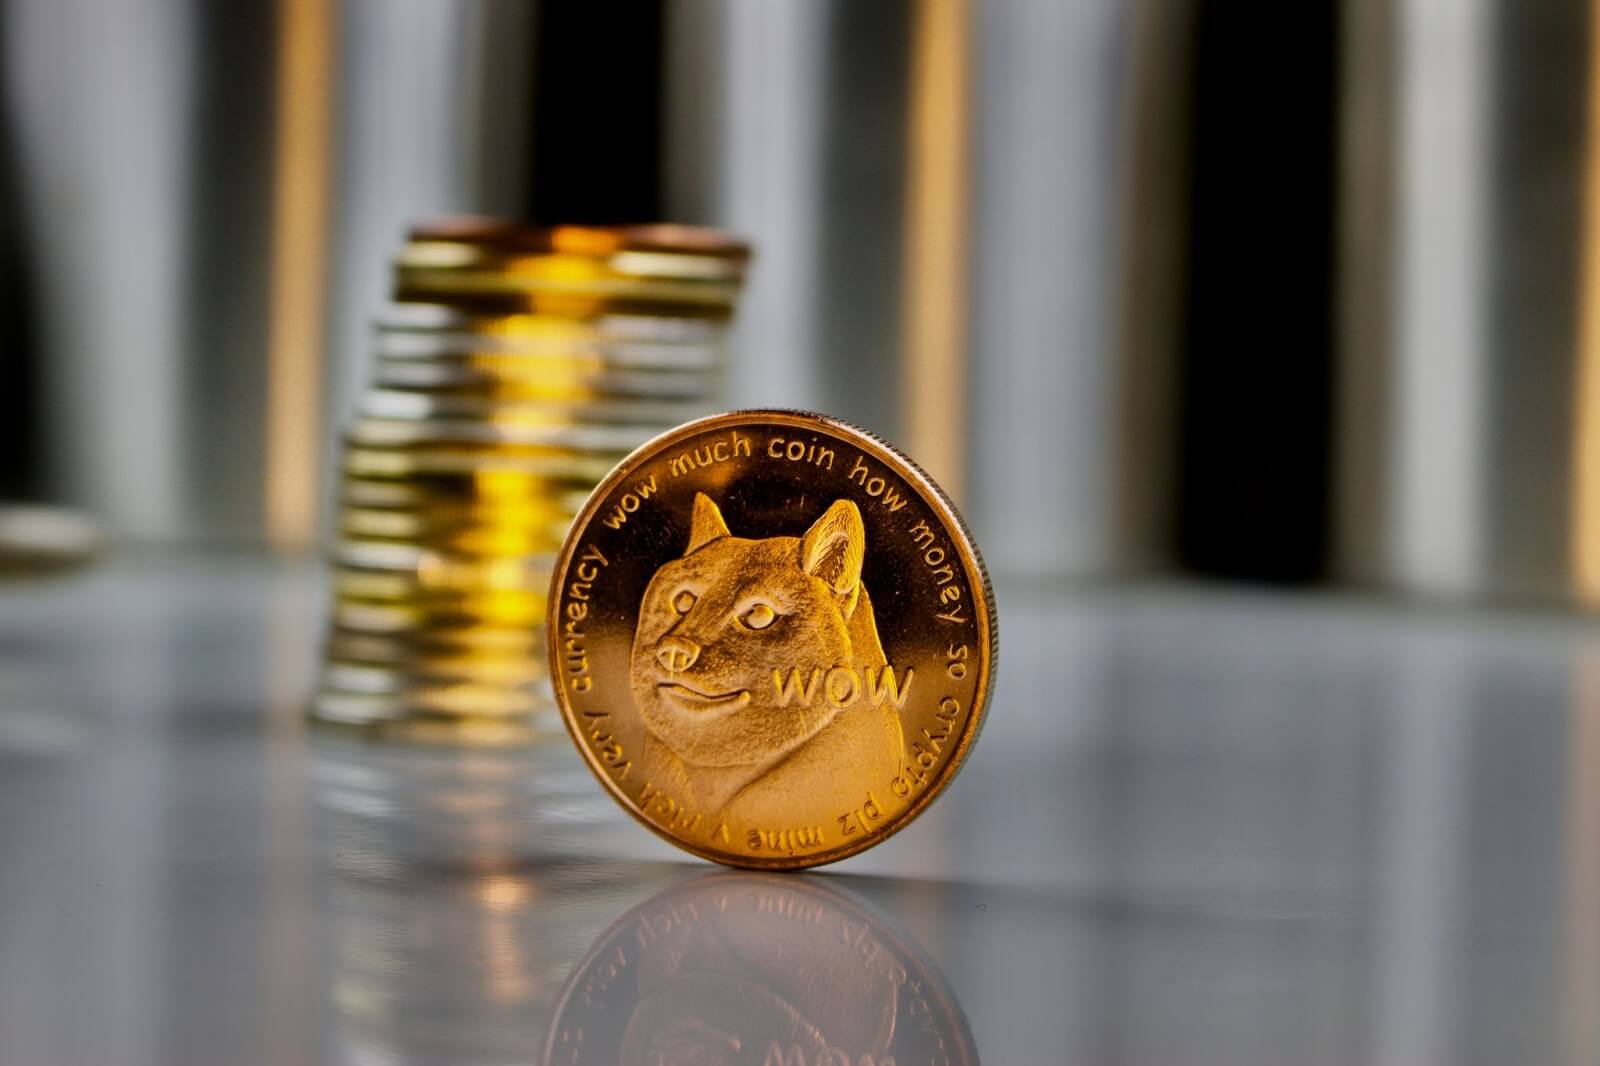  coin doget value doge token surges buy 